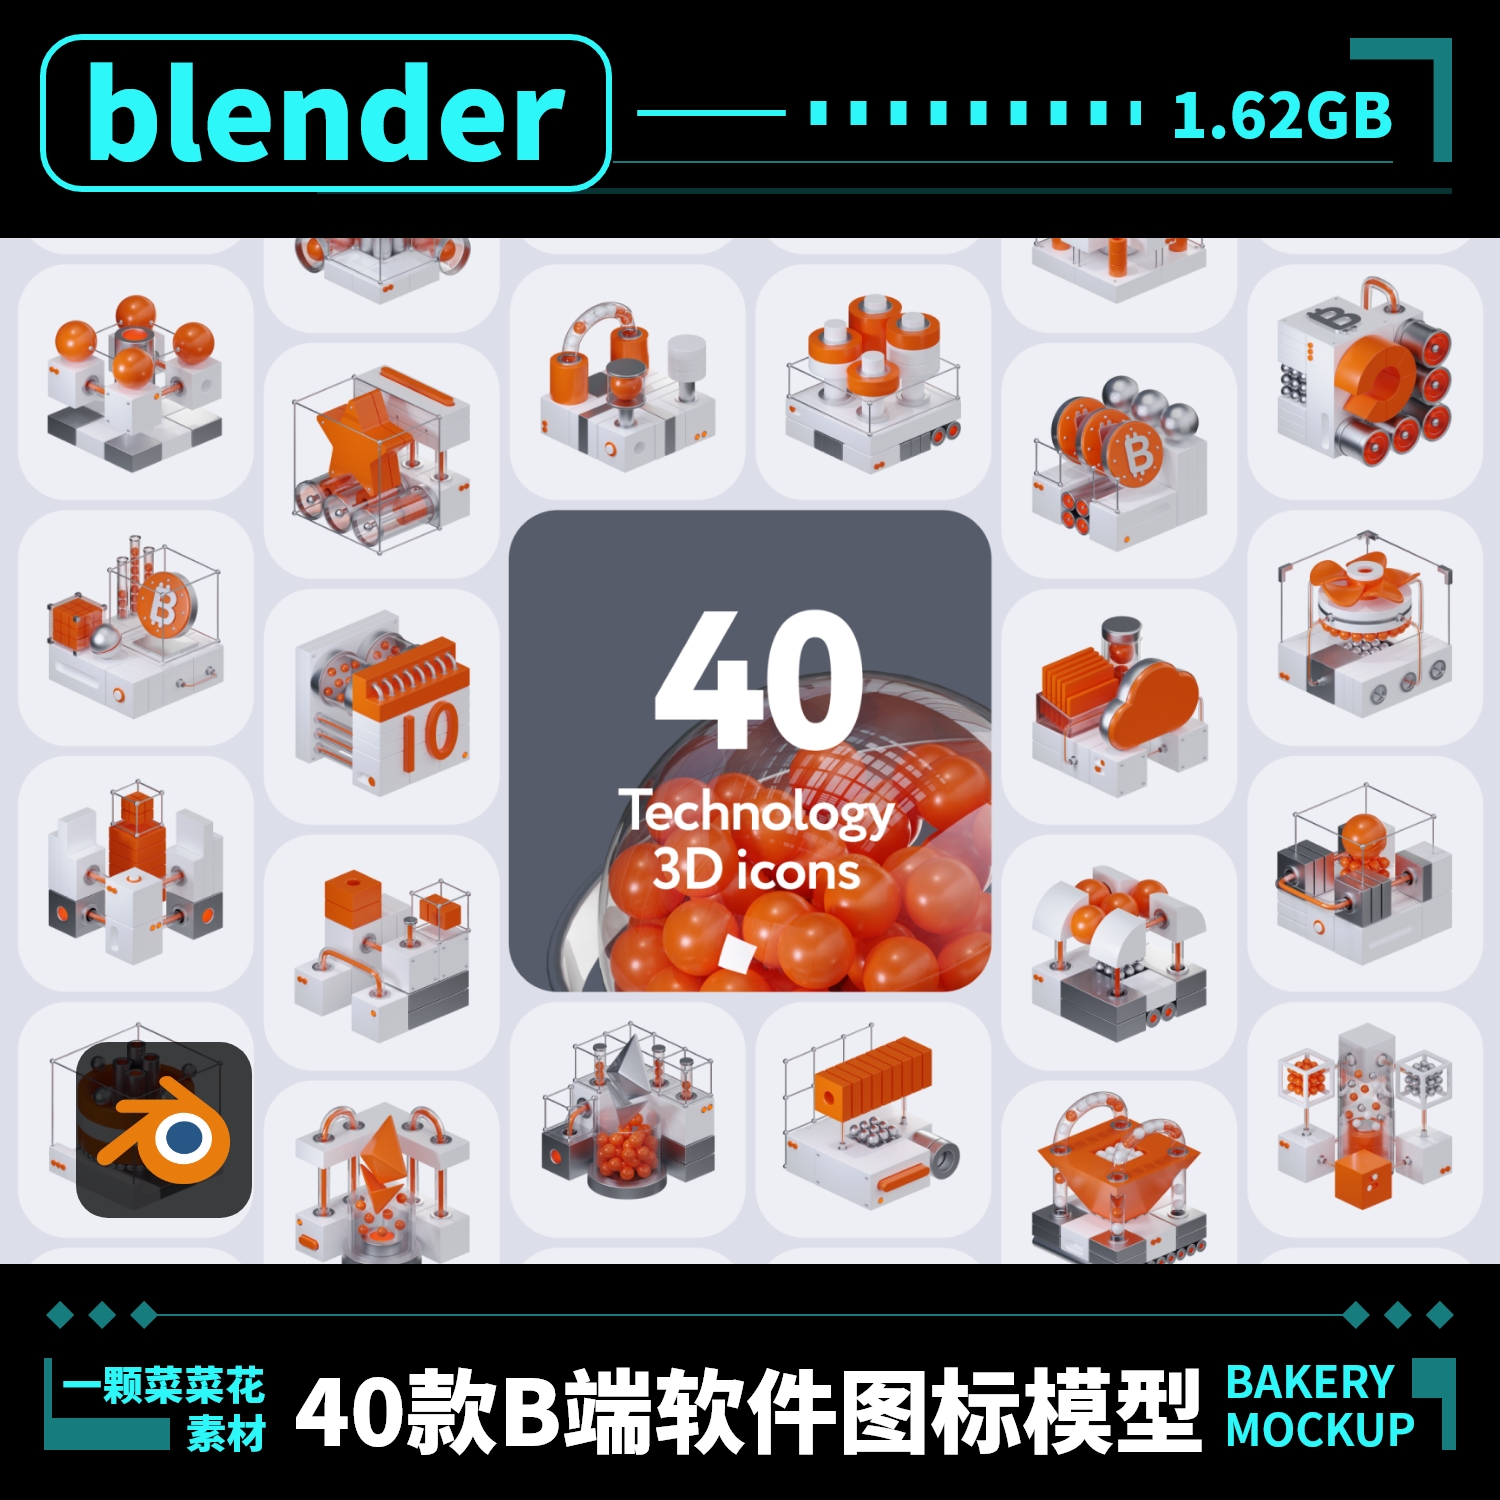 blender科技官网B端互联网金属3D立体图标icon模型素材设计 A163